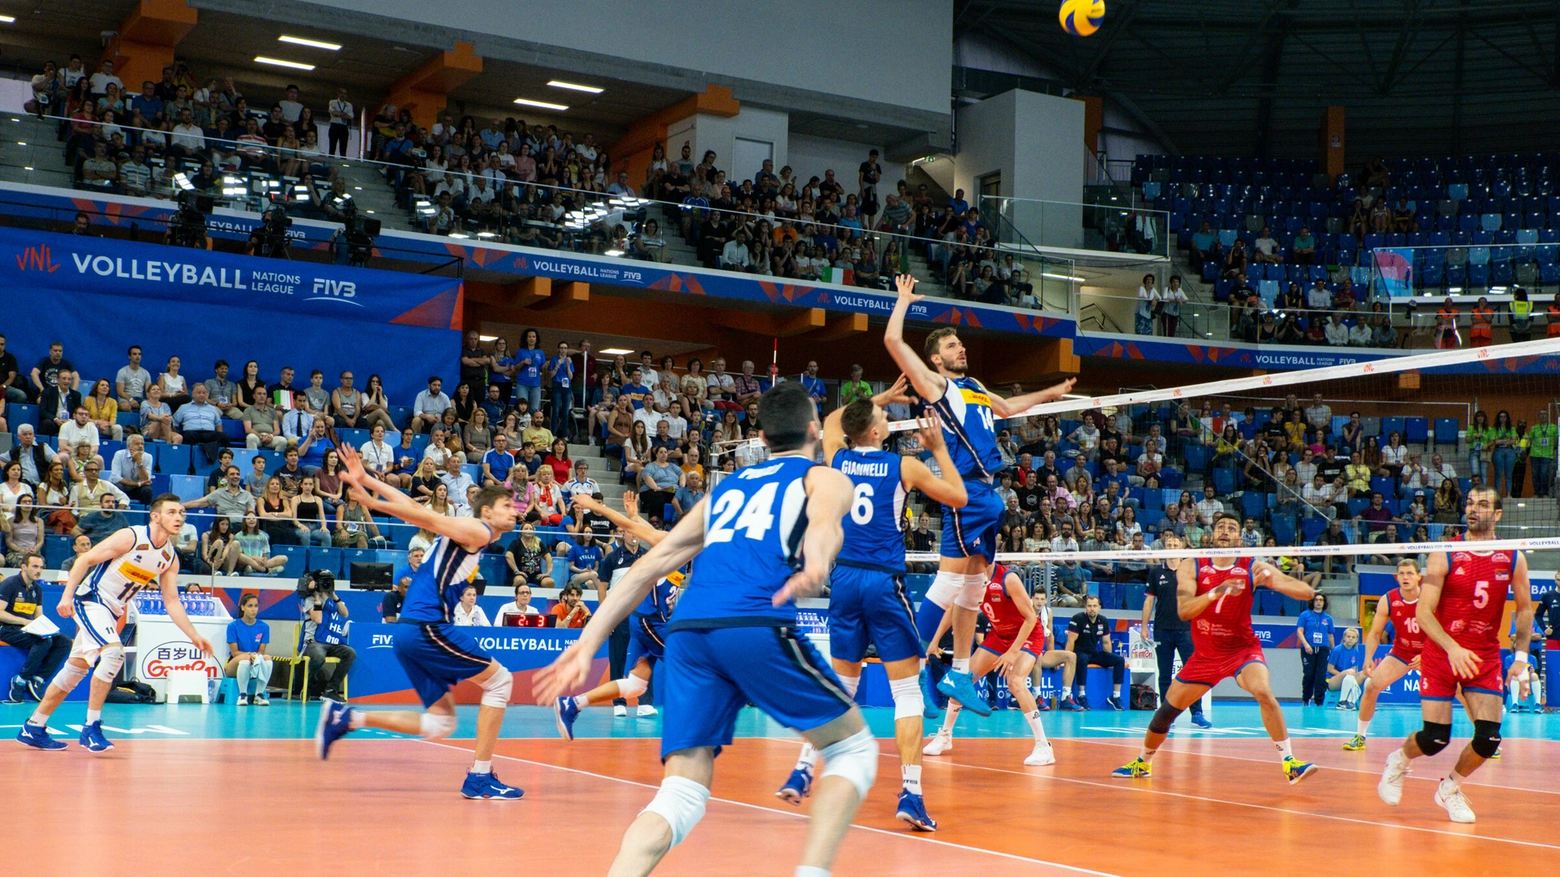 Europei volley, Italia favorita nel girone (foto Lapresse)